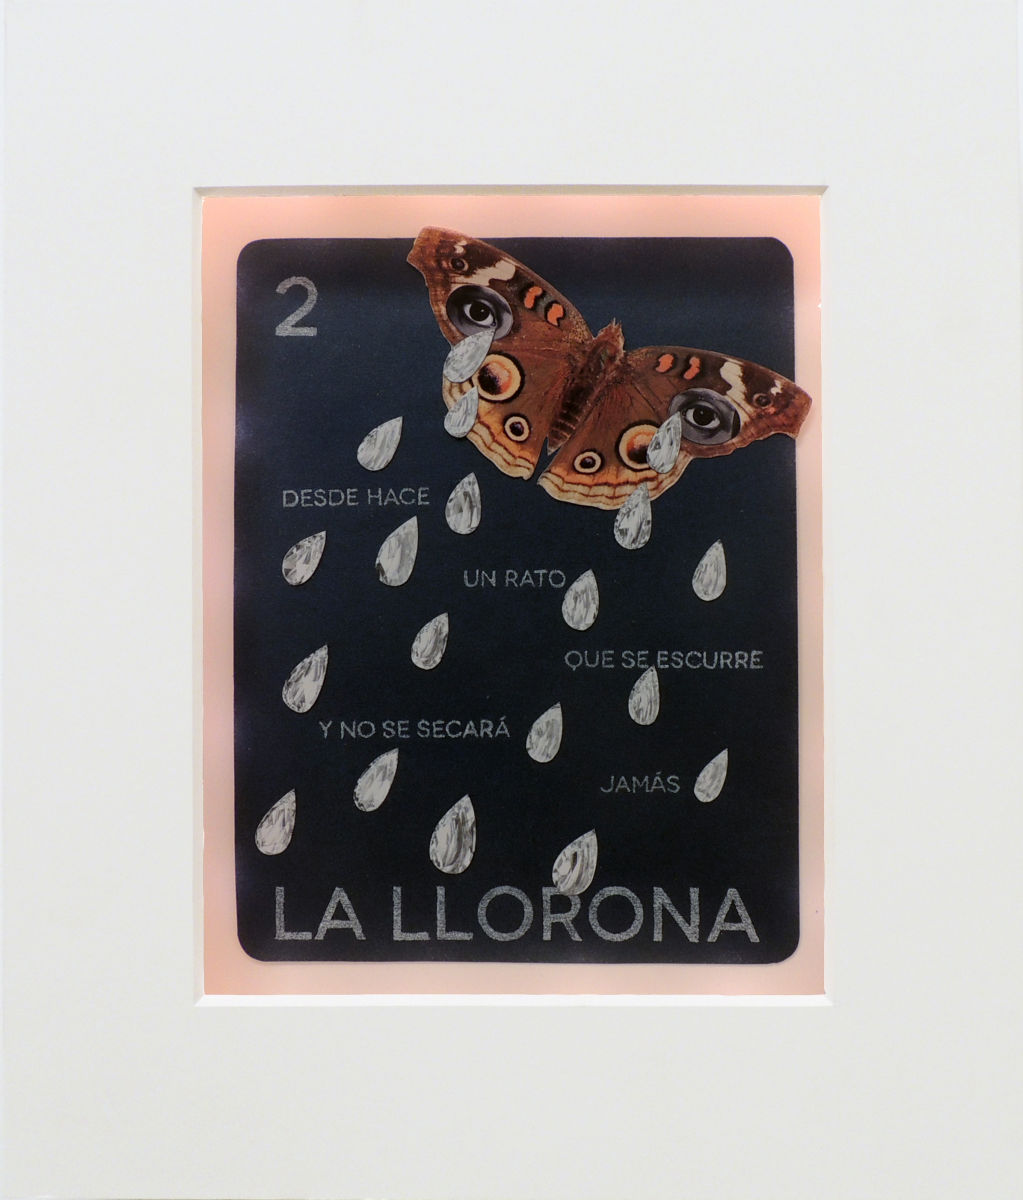 La Llorona (The Crying One)